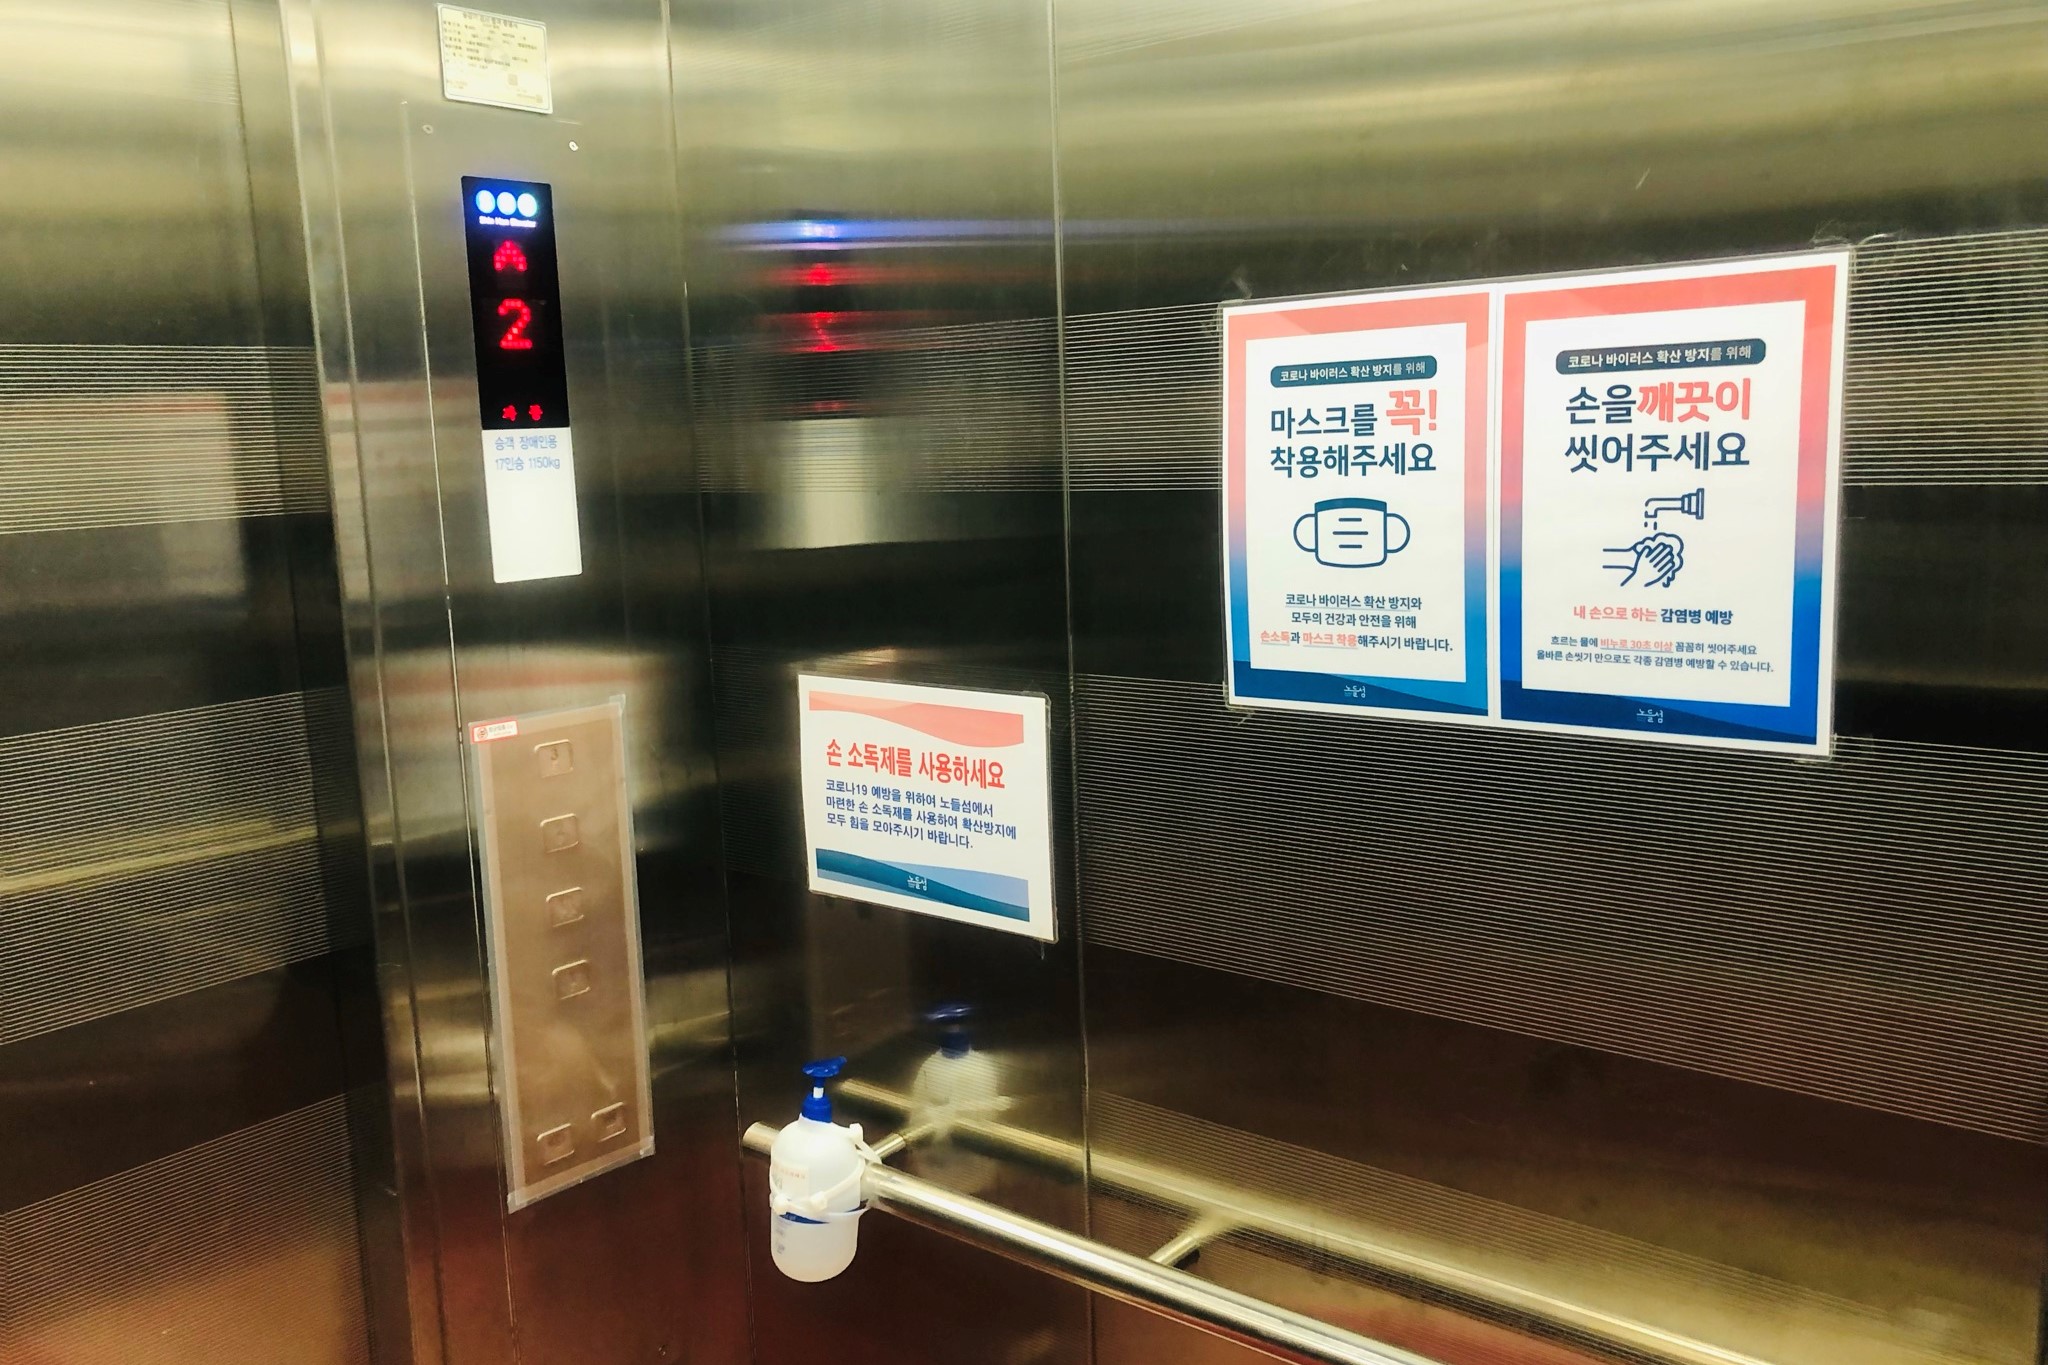 Elevator0 : Elevator buttons with Korean braille description